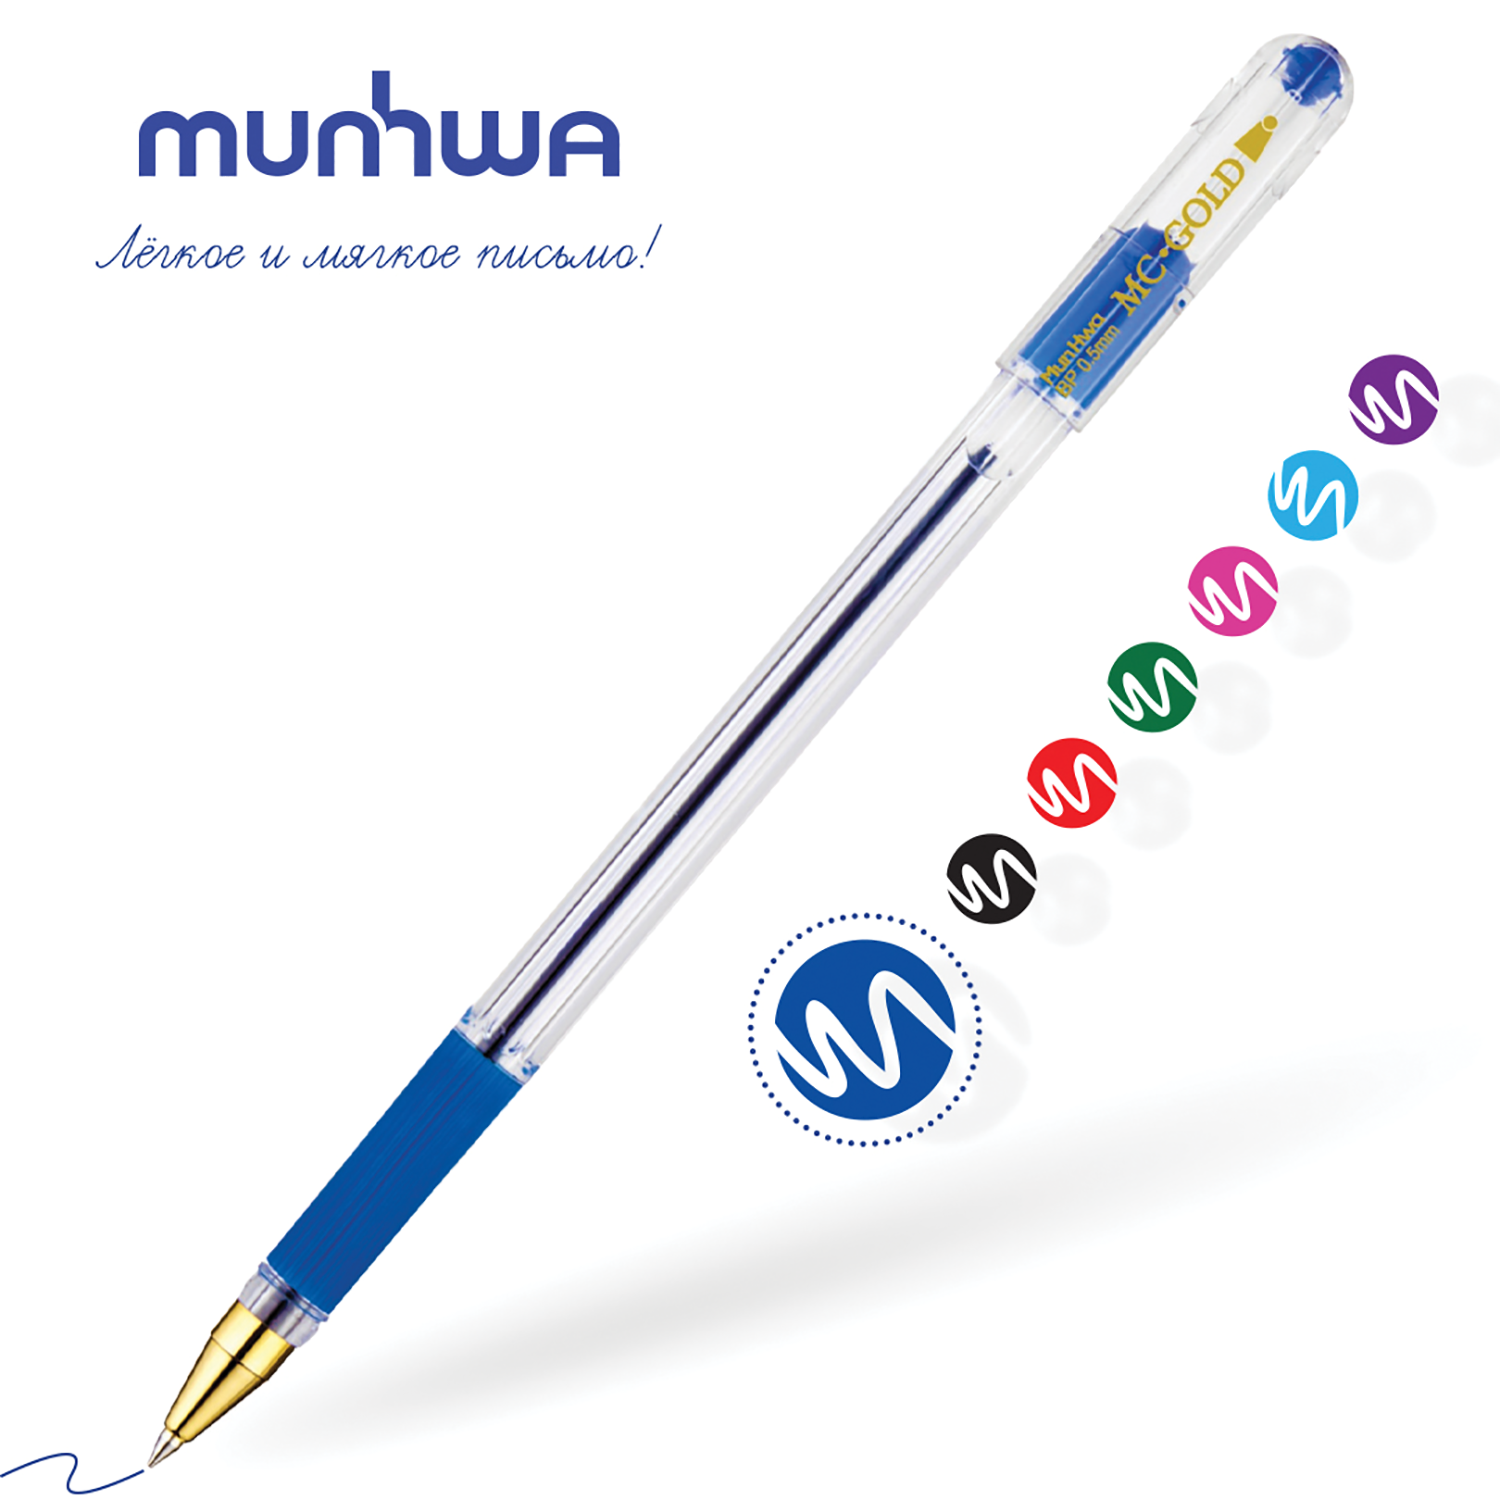 Mc gold ручка. Ручка шариковая MUNHWA MC Gold синяя. Ручка шариковая 0,5 мм., синяя, грип, MUNHWA MC Gold. Ручка шариковая MUNHWA "MC Gold" синяя, 0,5мм, грип, штрих-код. MUNHWA ручка шариковая MC Gold, 0.5.